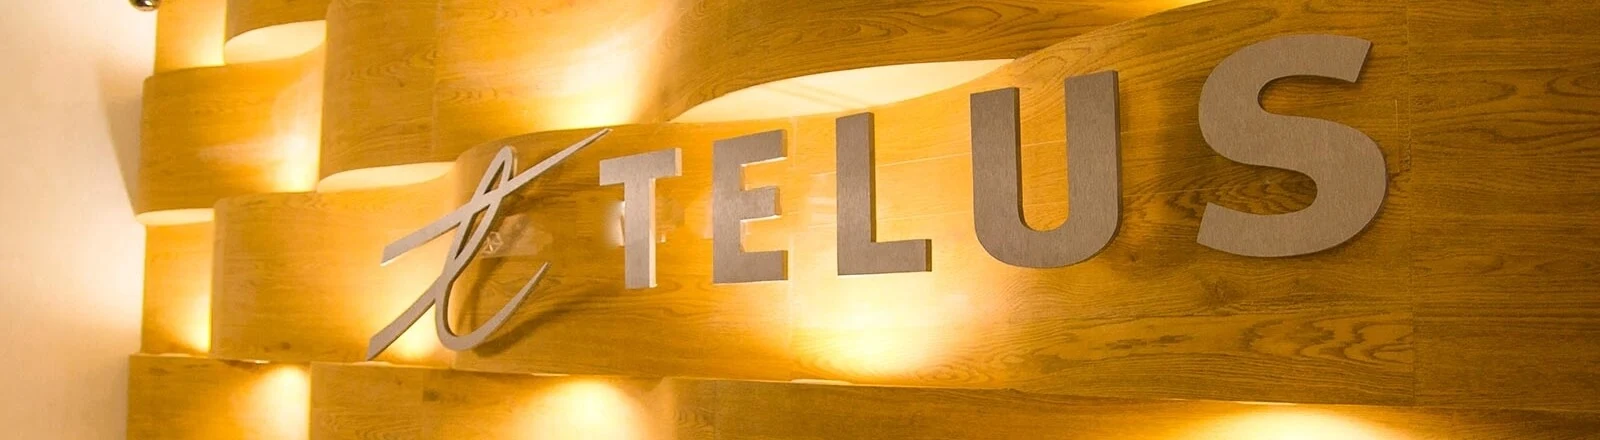 TELUS International logo against a wall in an office